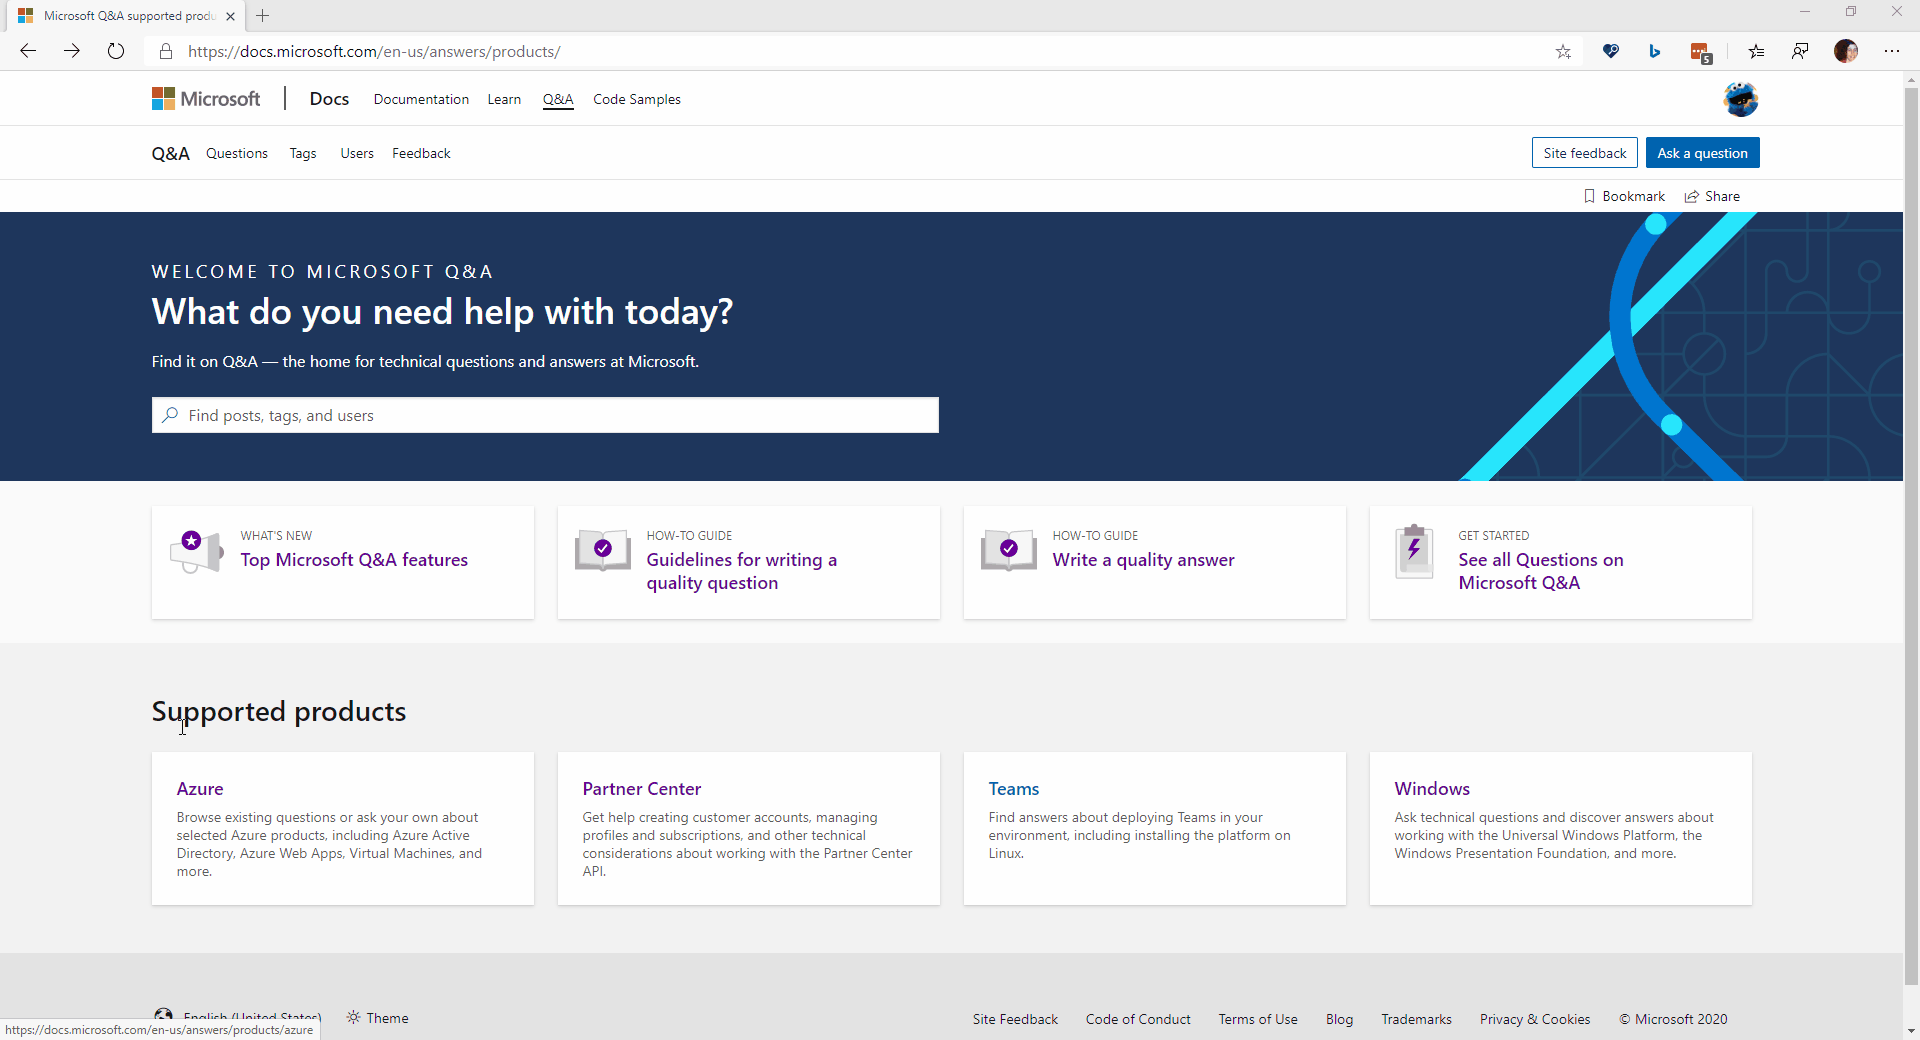 Startsidan för Microsoft Q&A